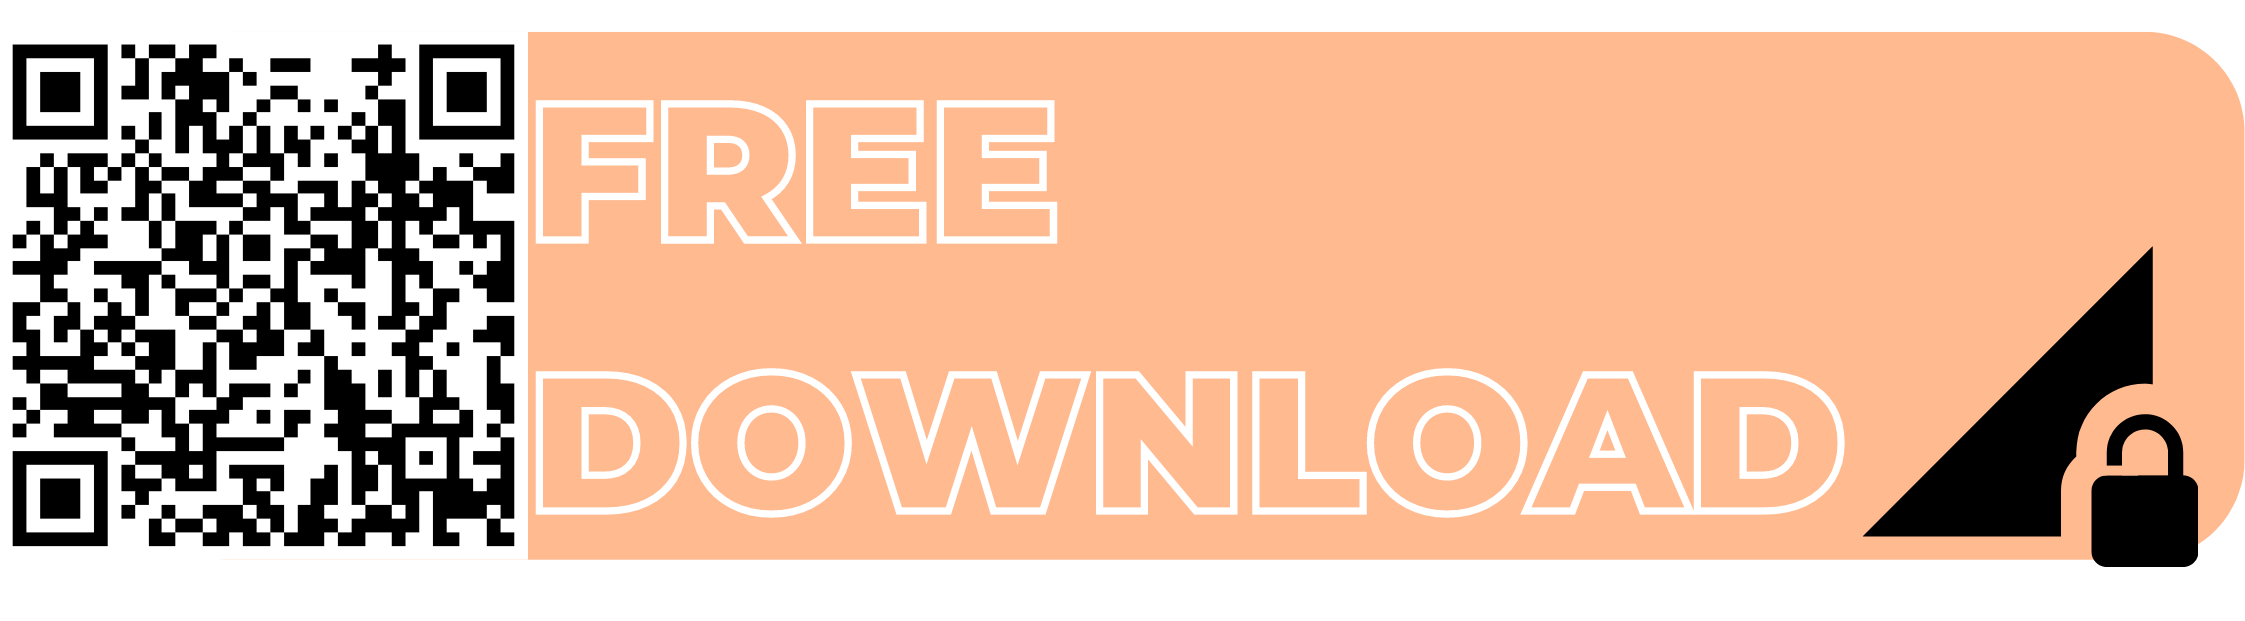 Free Download QR